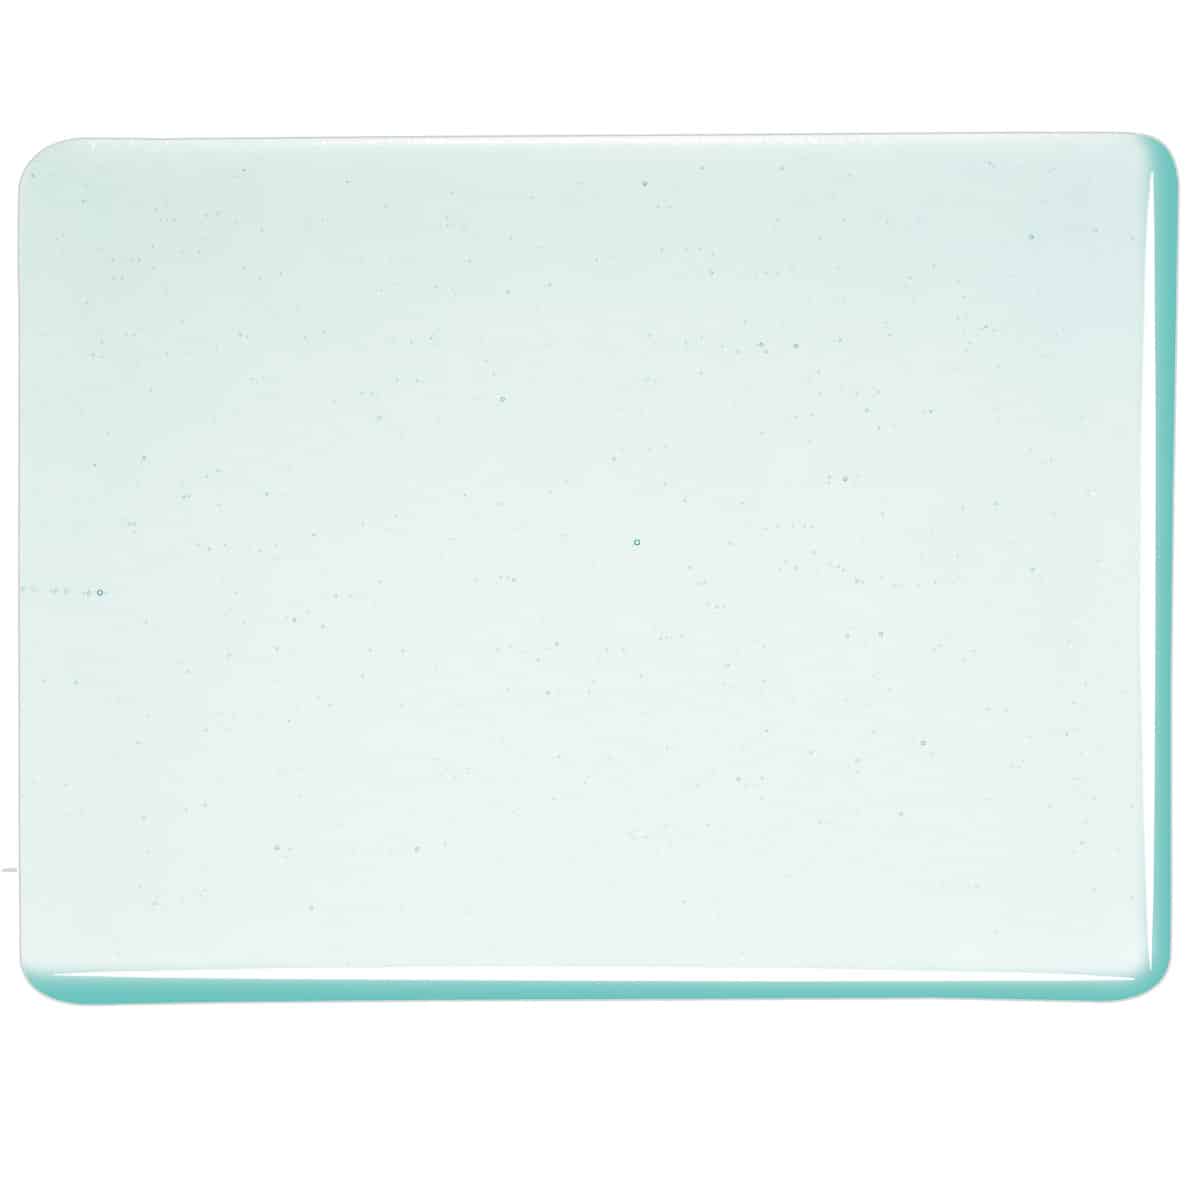 001808 Aqua Blue Tint transparent sheet glass swatch